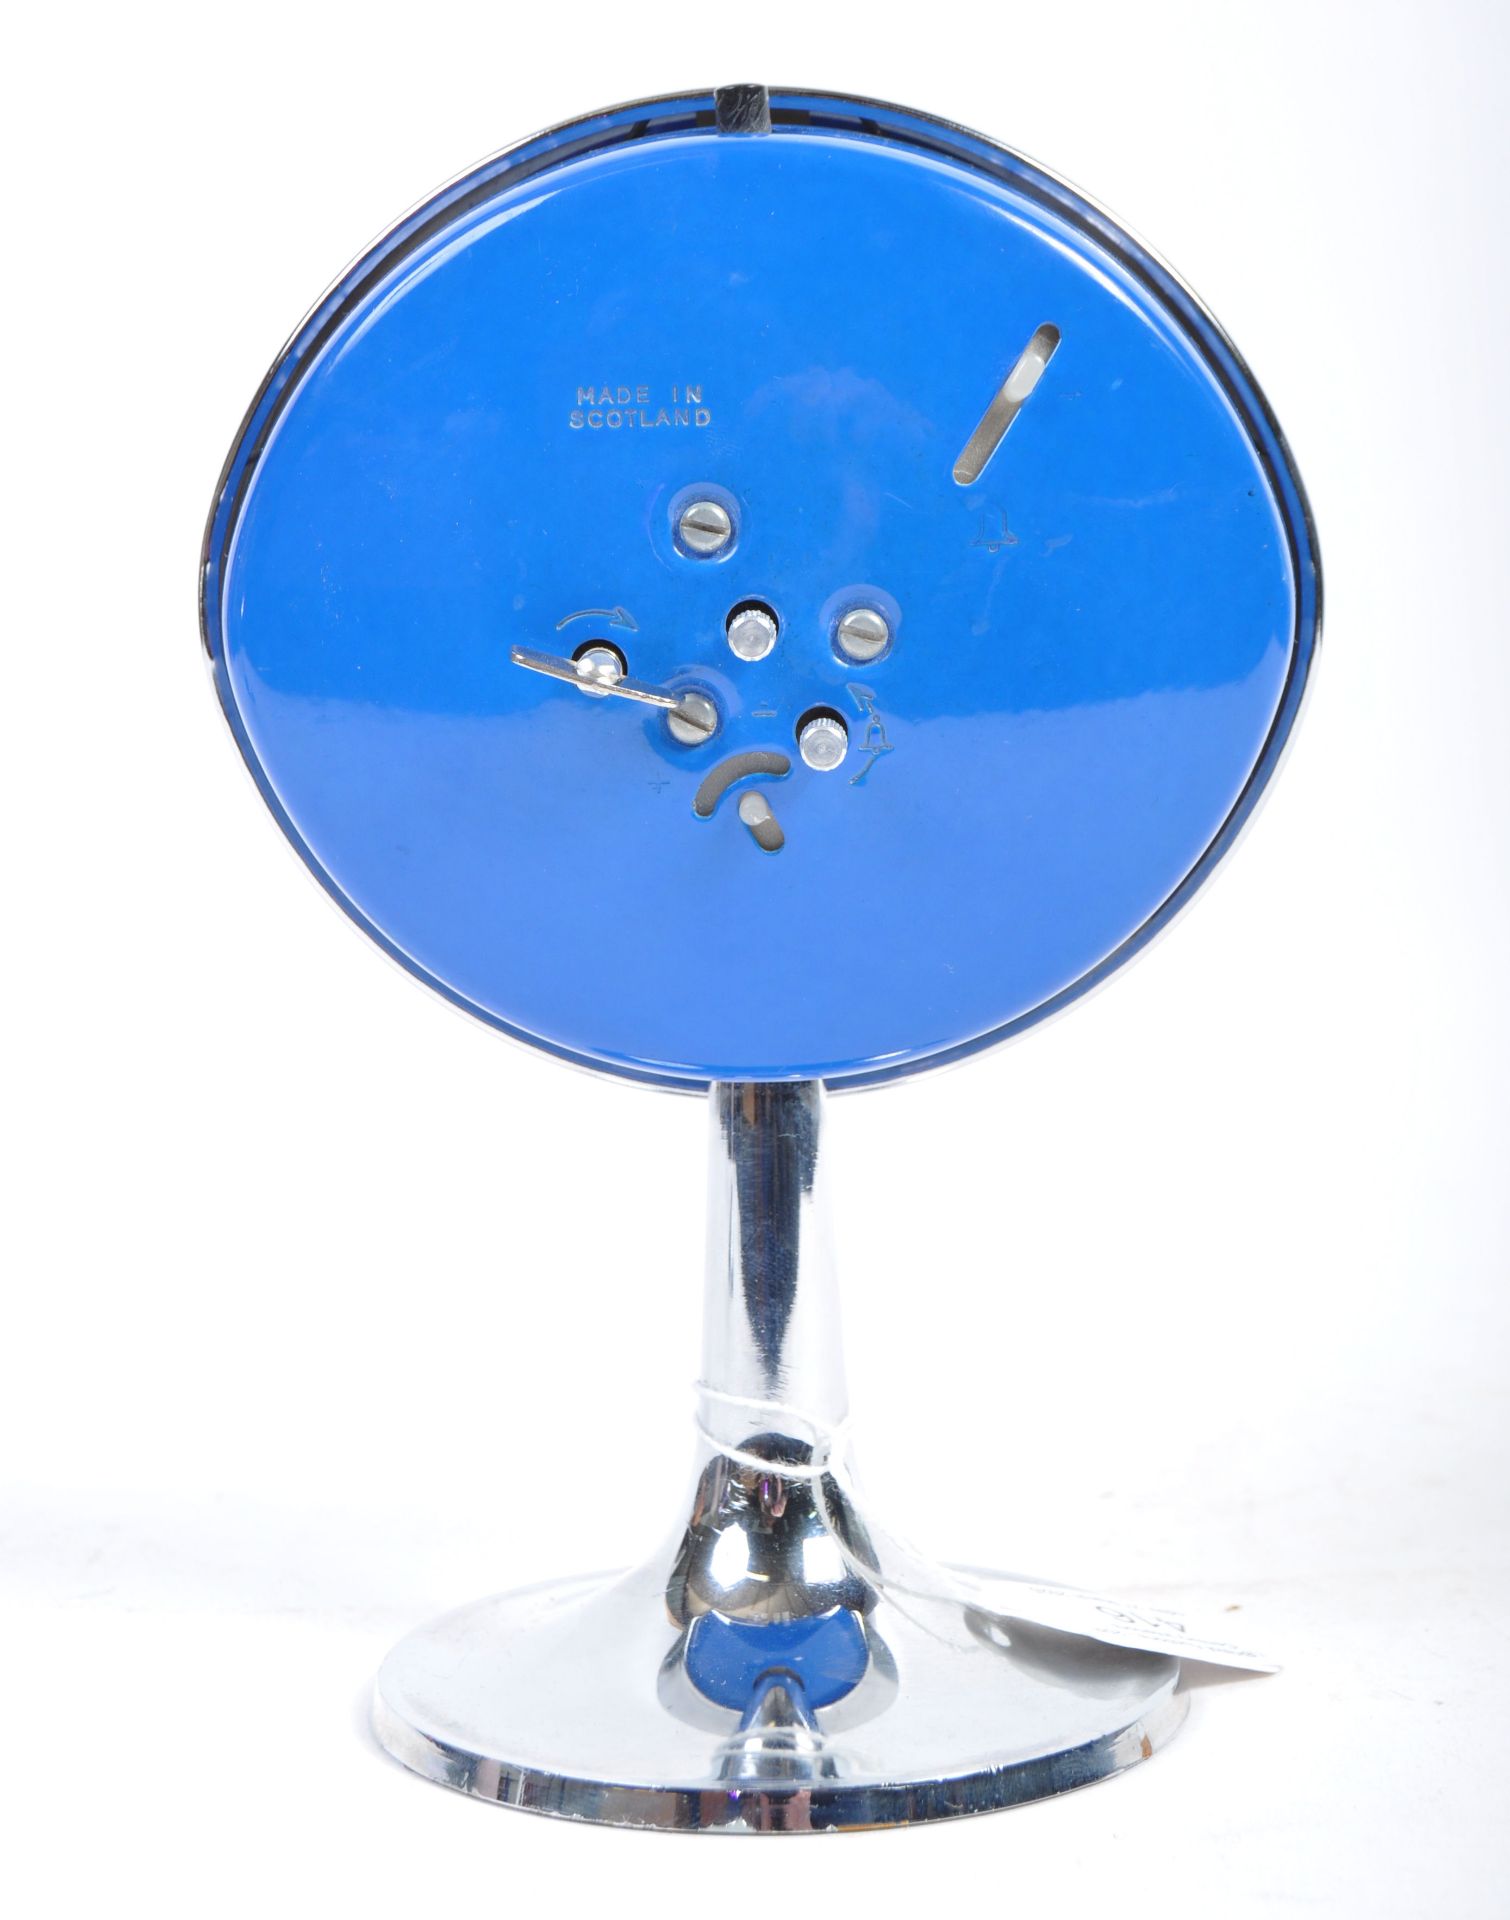 WESTCLOX - BIG BEN - RETRO VINTAGE ATOMIC STYLE DESK CLOCK - Image 4 of 6